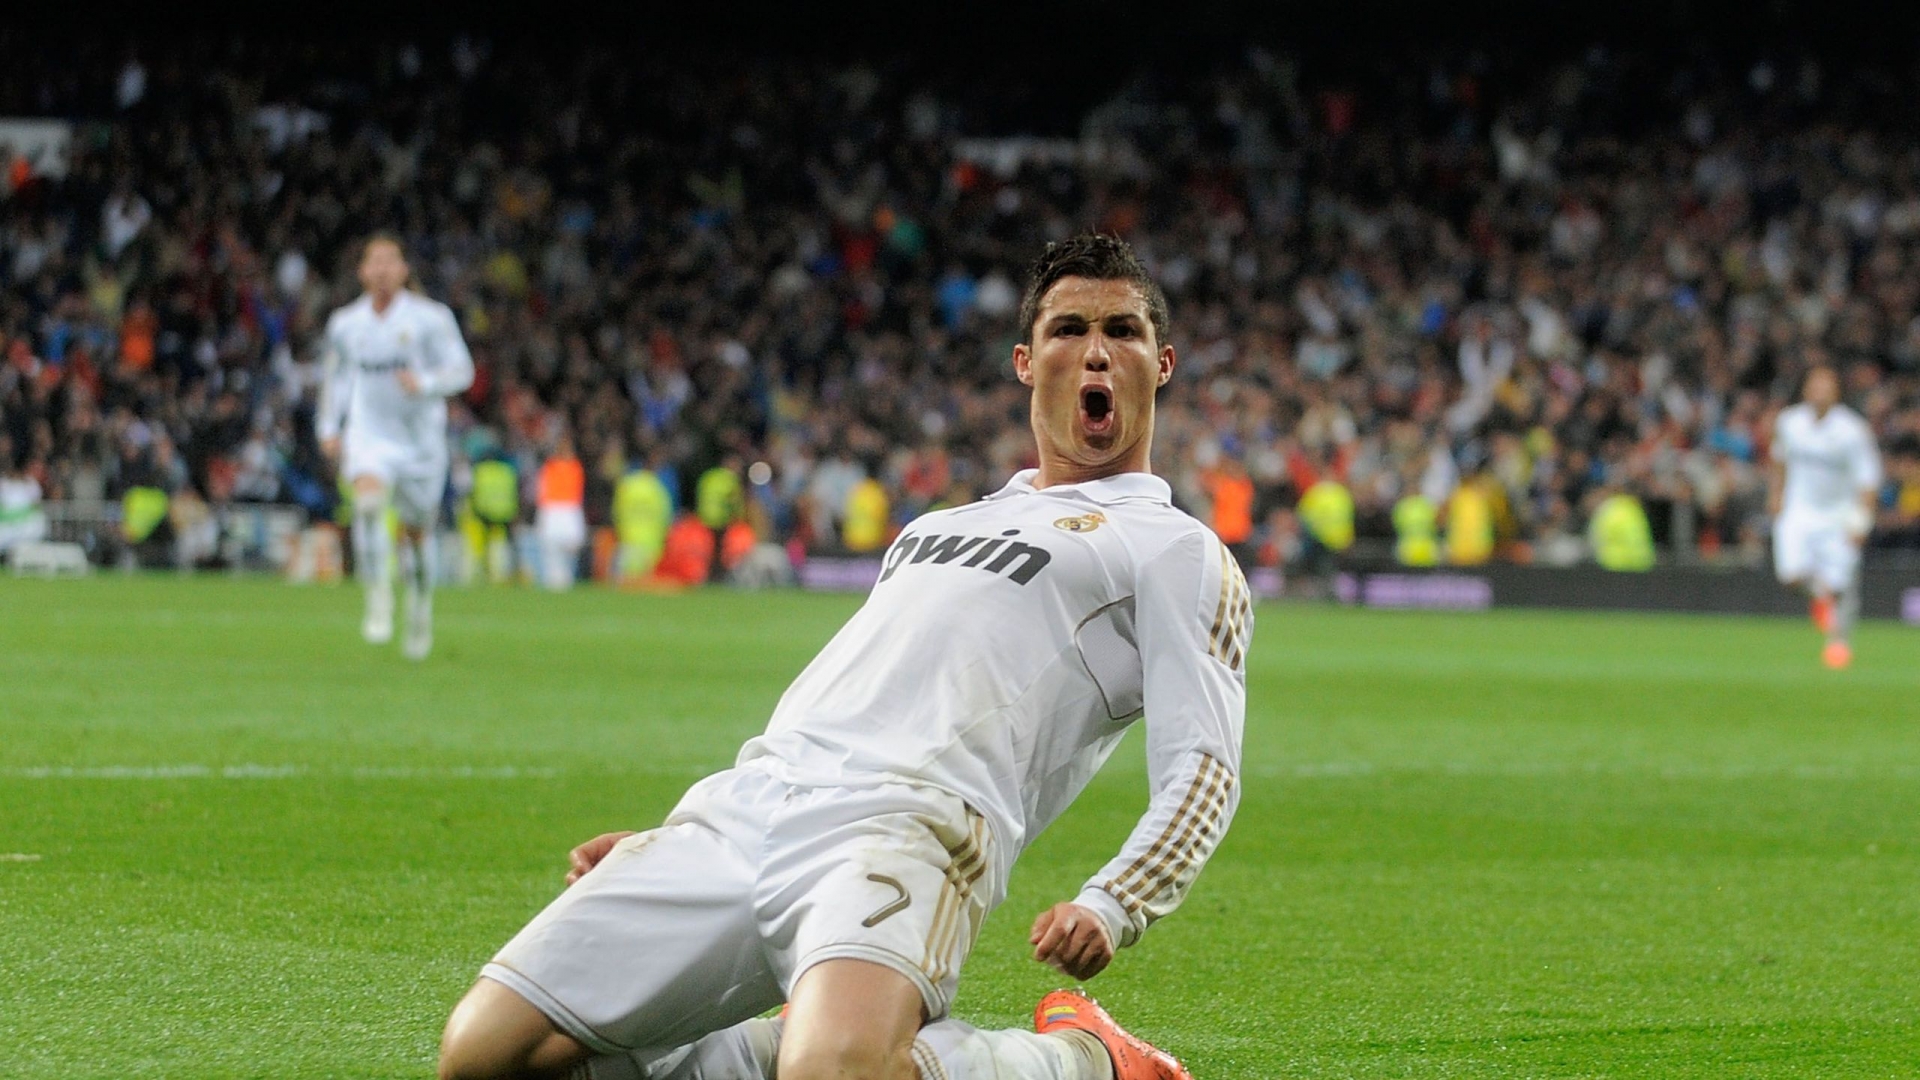 Cristiano Ronaldo Celebrating for 1920 x 1080 HDTV 1080p resolution